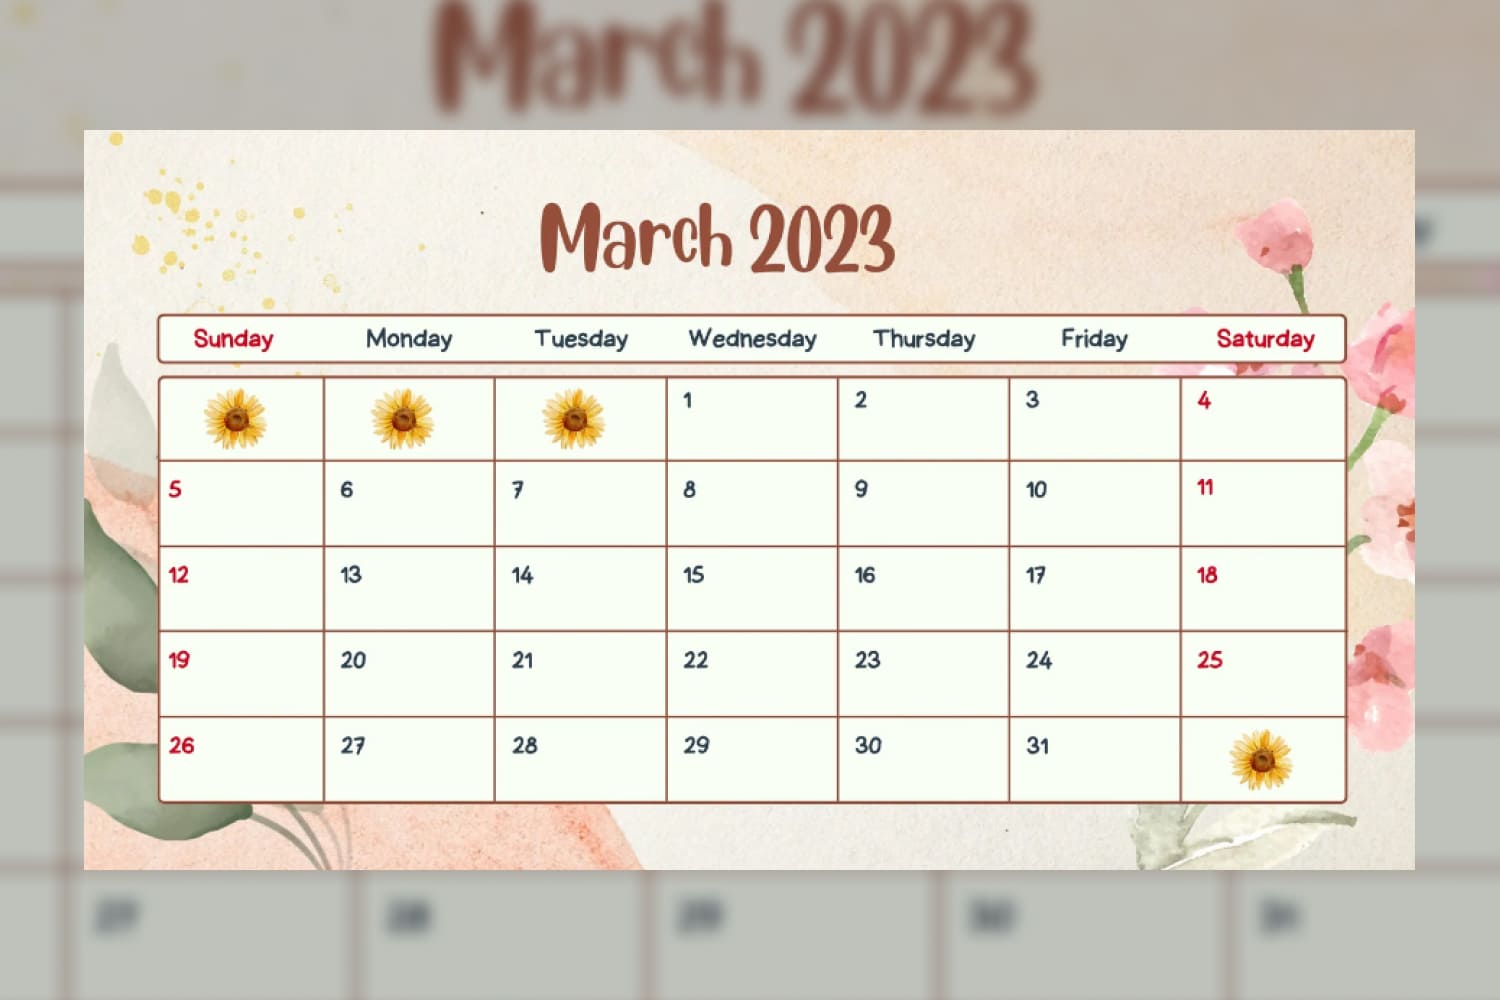 March calendar in a light grayish-orange color palette.